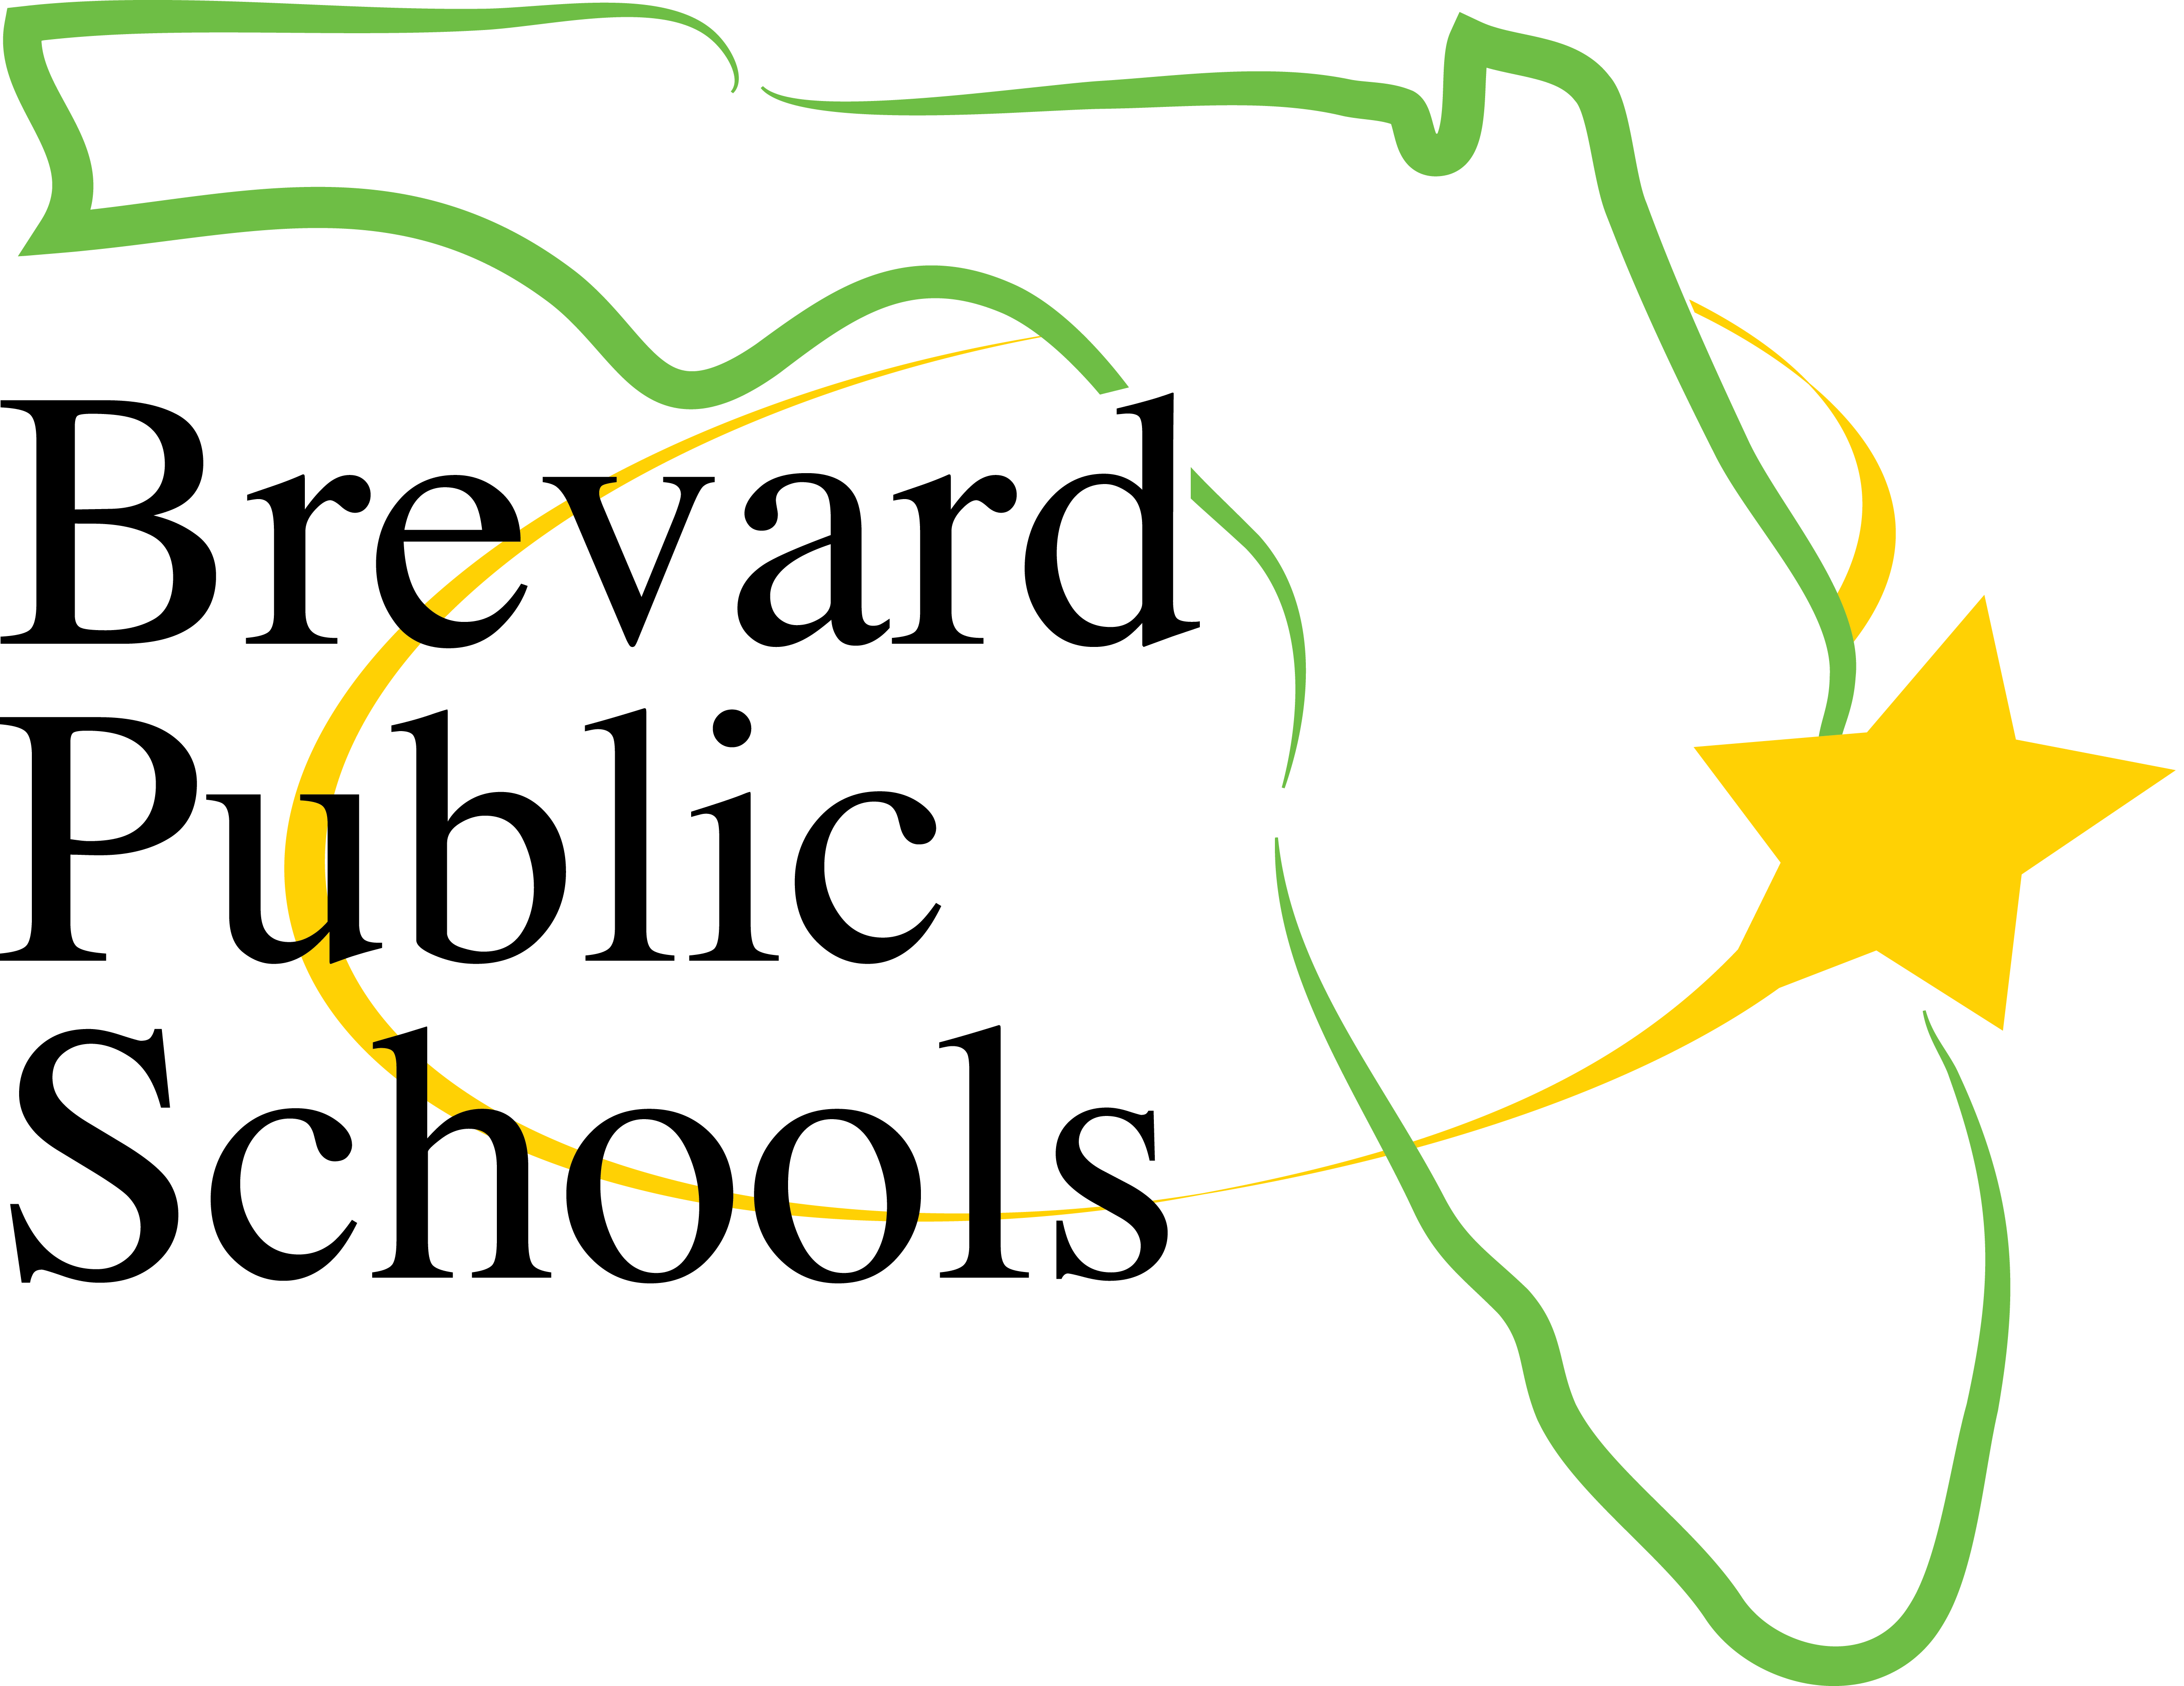 Brevard Public Schools (BPS)